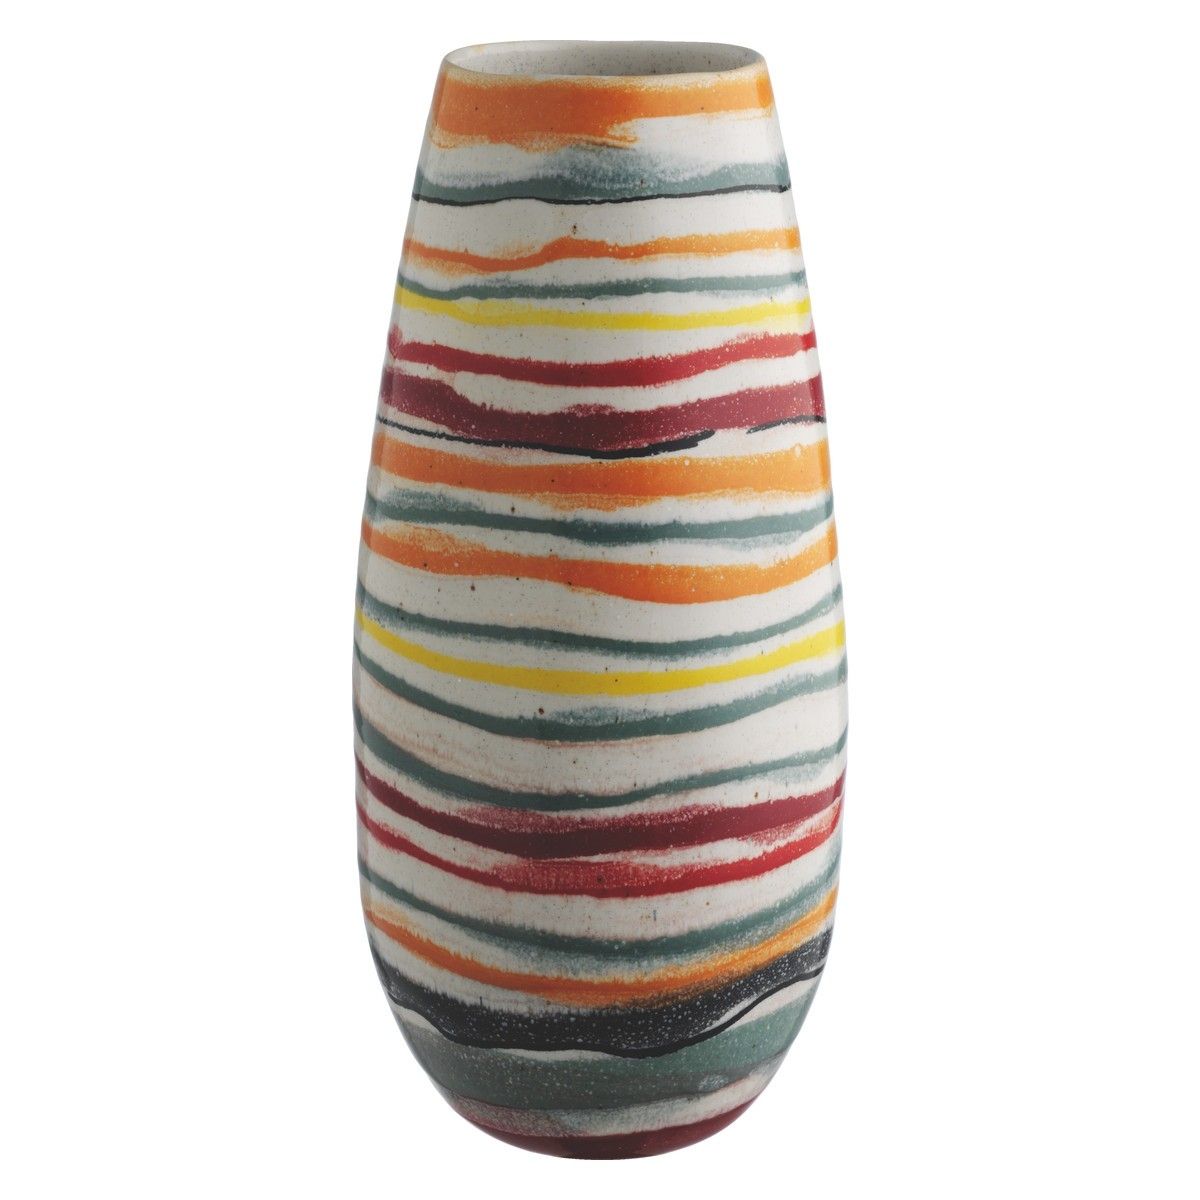 Wave Multi Coloured Striped Ceramic Vase Buy Now At Habitat Uk Regarding Multi Coloured Striped Curtains (View 11 of 15)